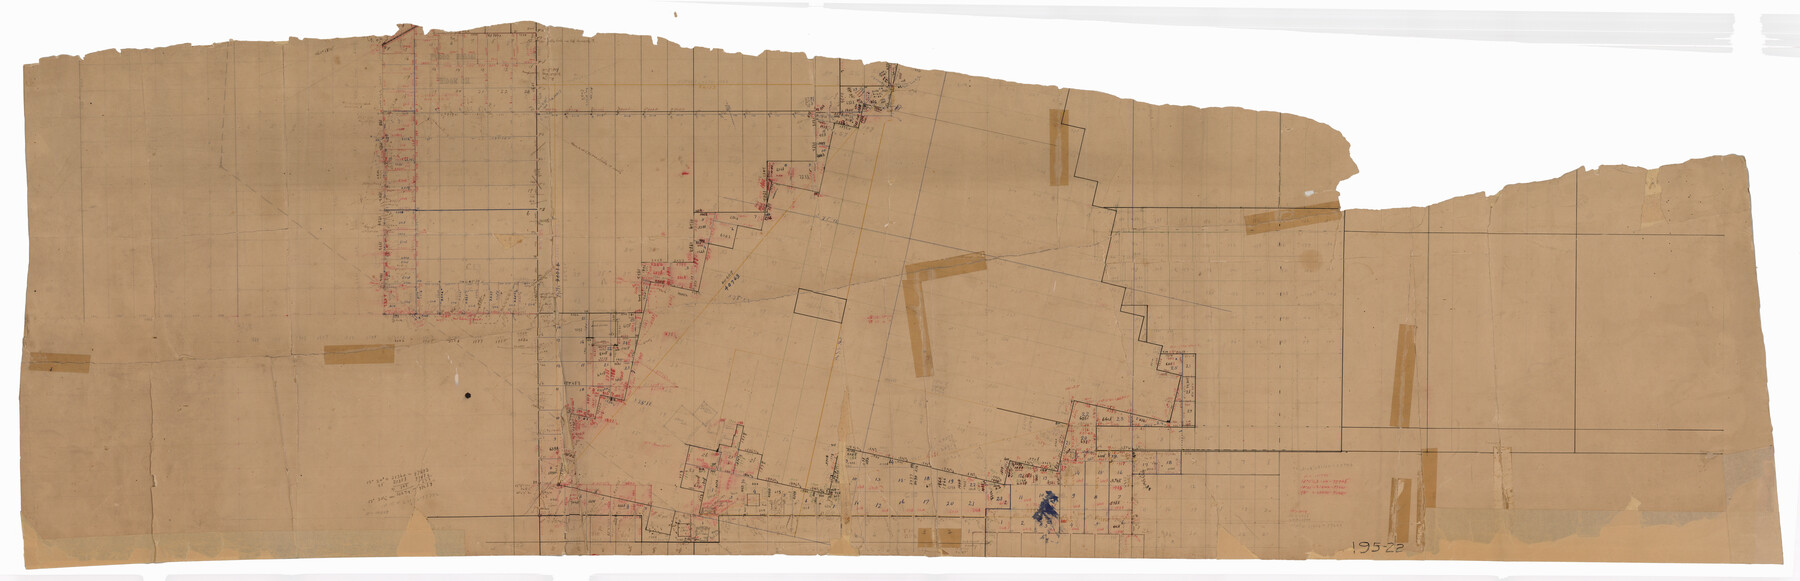 93123, [Sketch showing Blocks C-11, C-13, C-14, C-16, C-10], Twichell Survey Records